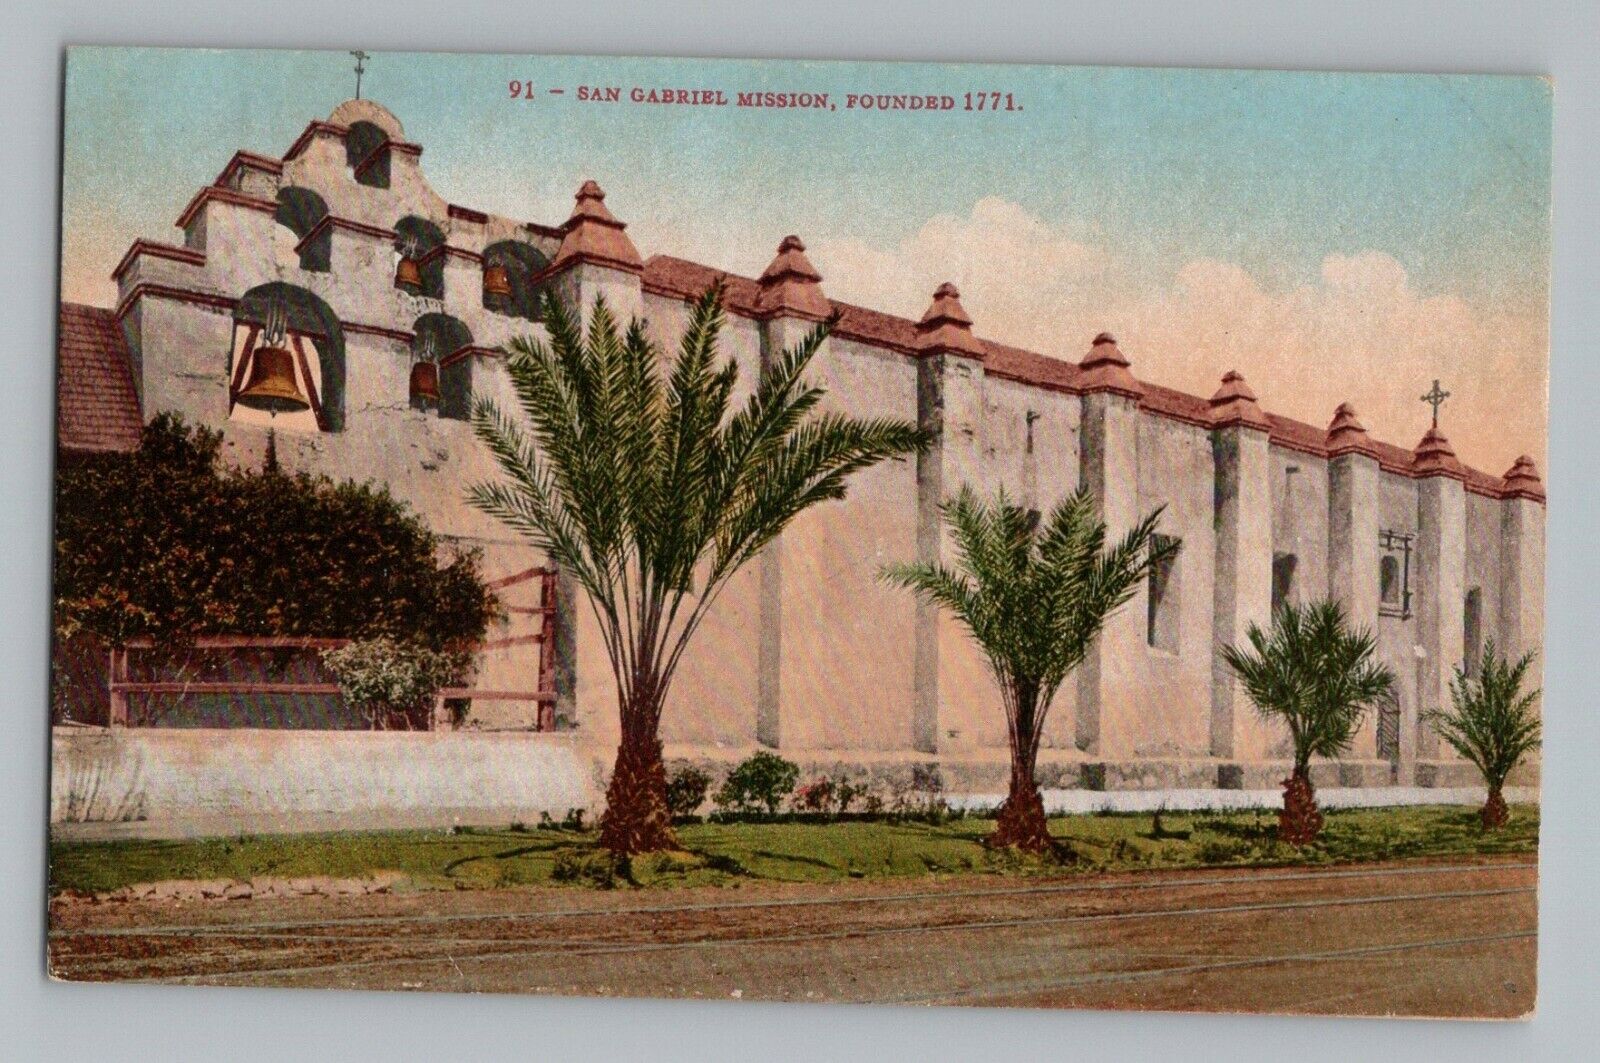 San Gabriel California CA Mission Founded 1771 Postcard 1907-15